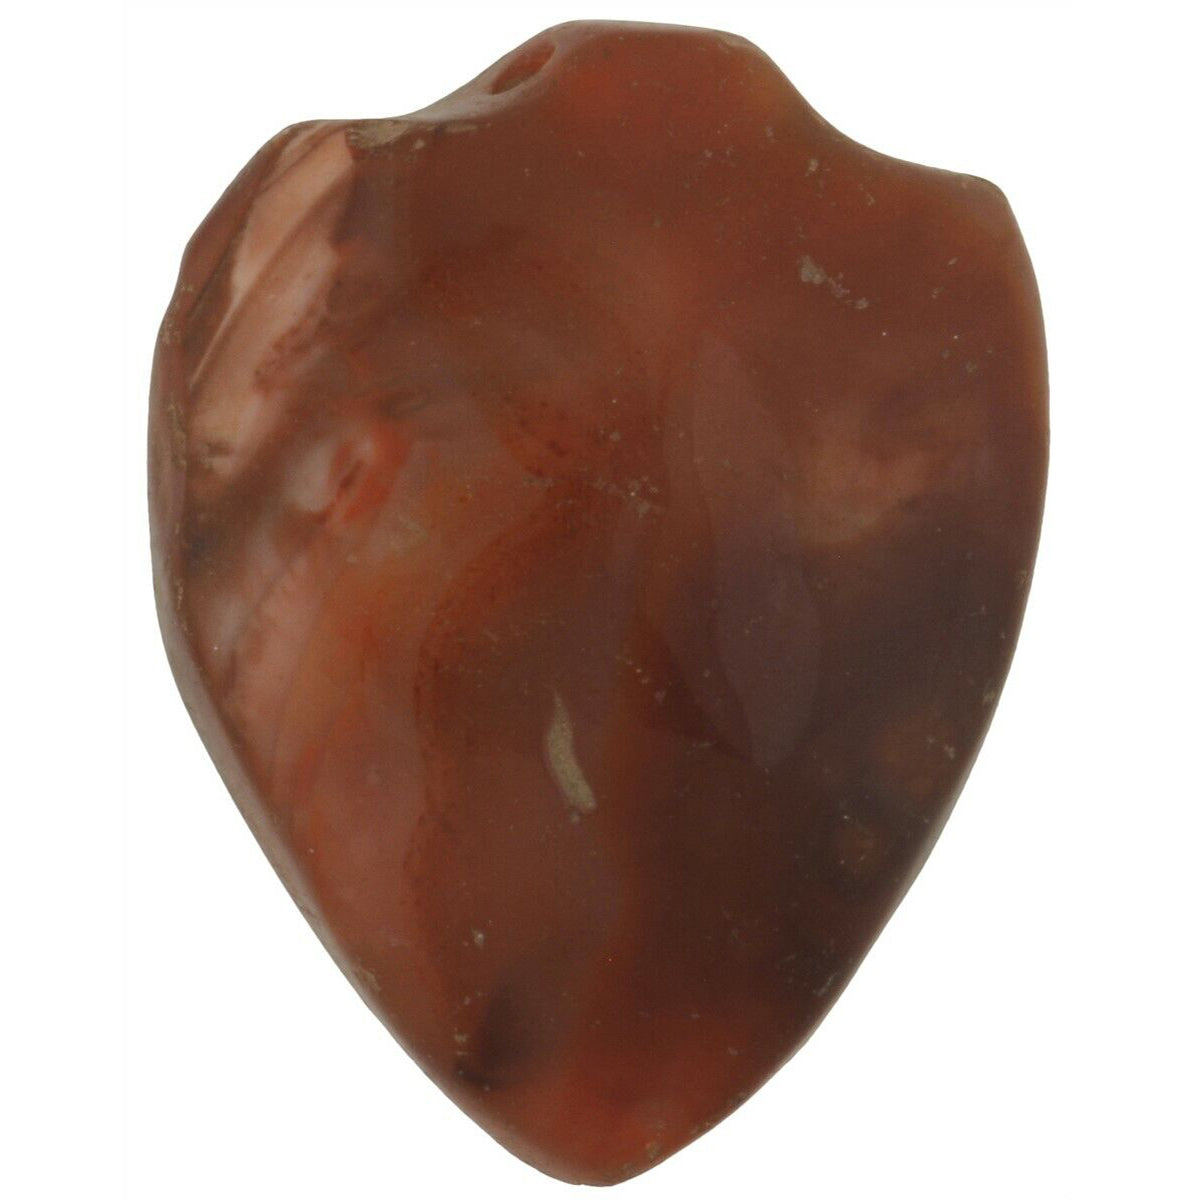 Antique African trade bead large carnelian Agate stone bead pendant heart Ghana - Tribalgh